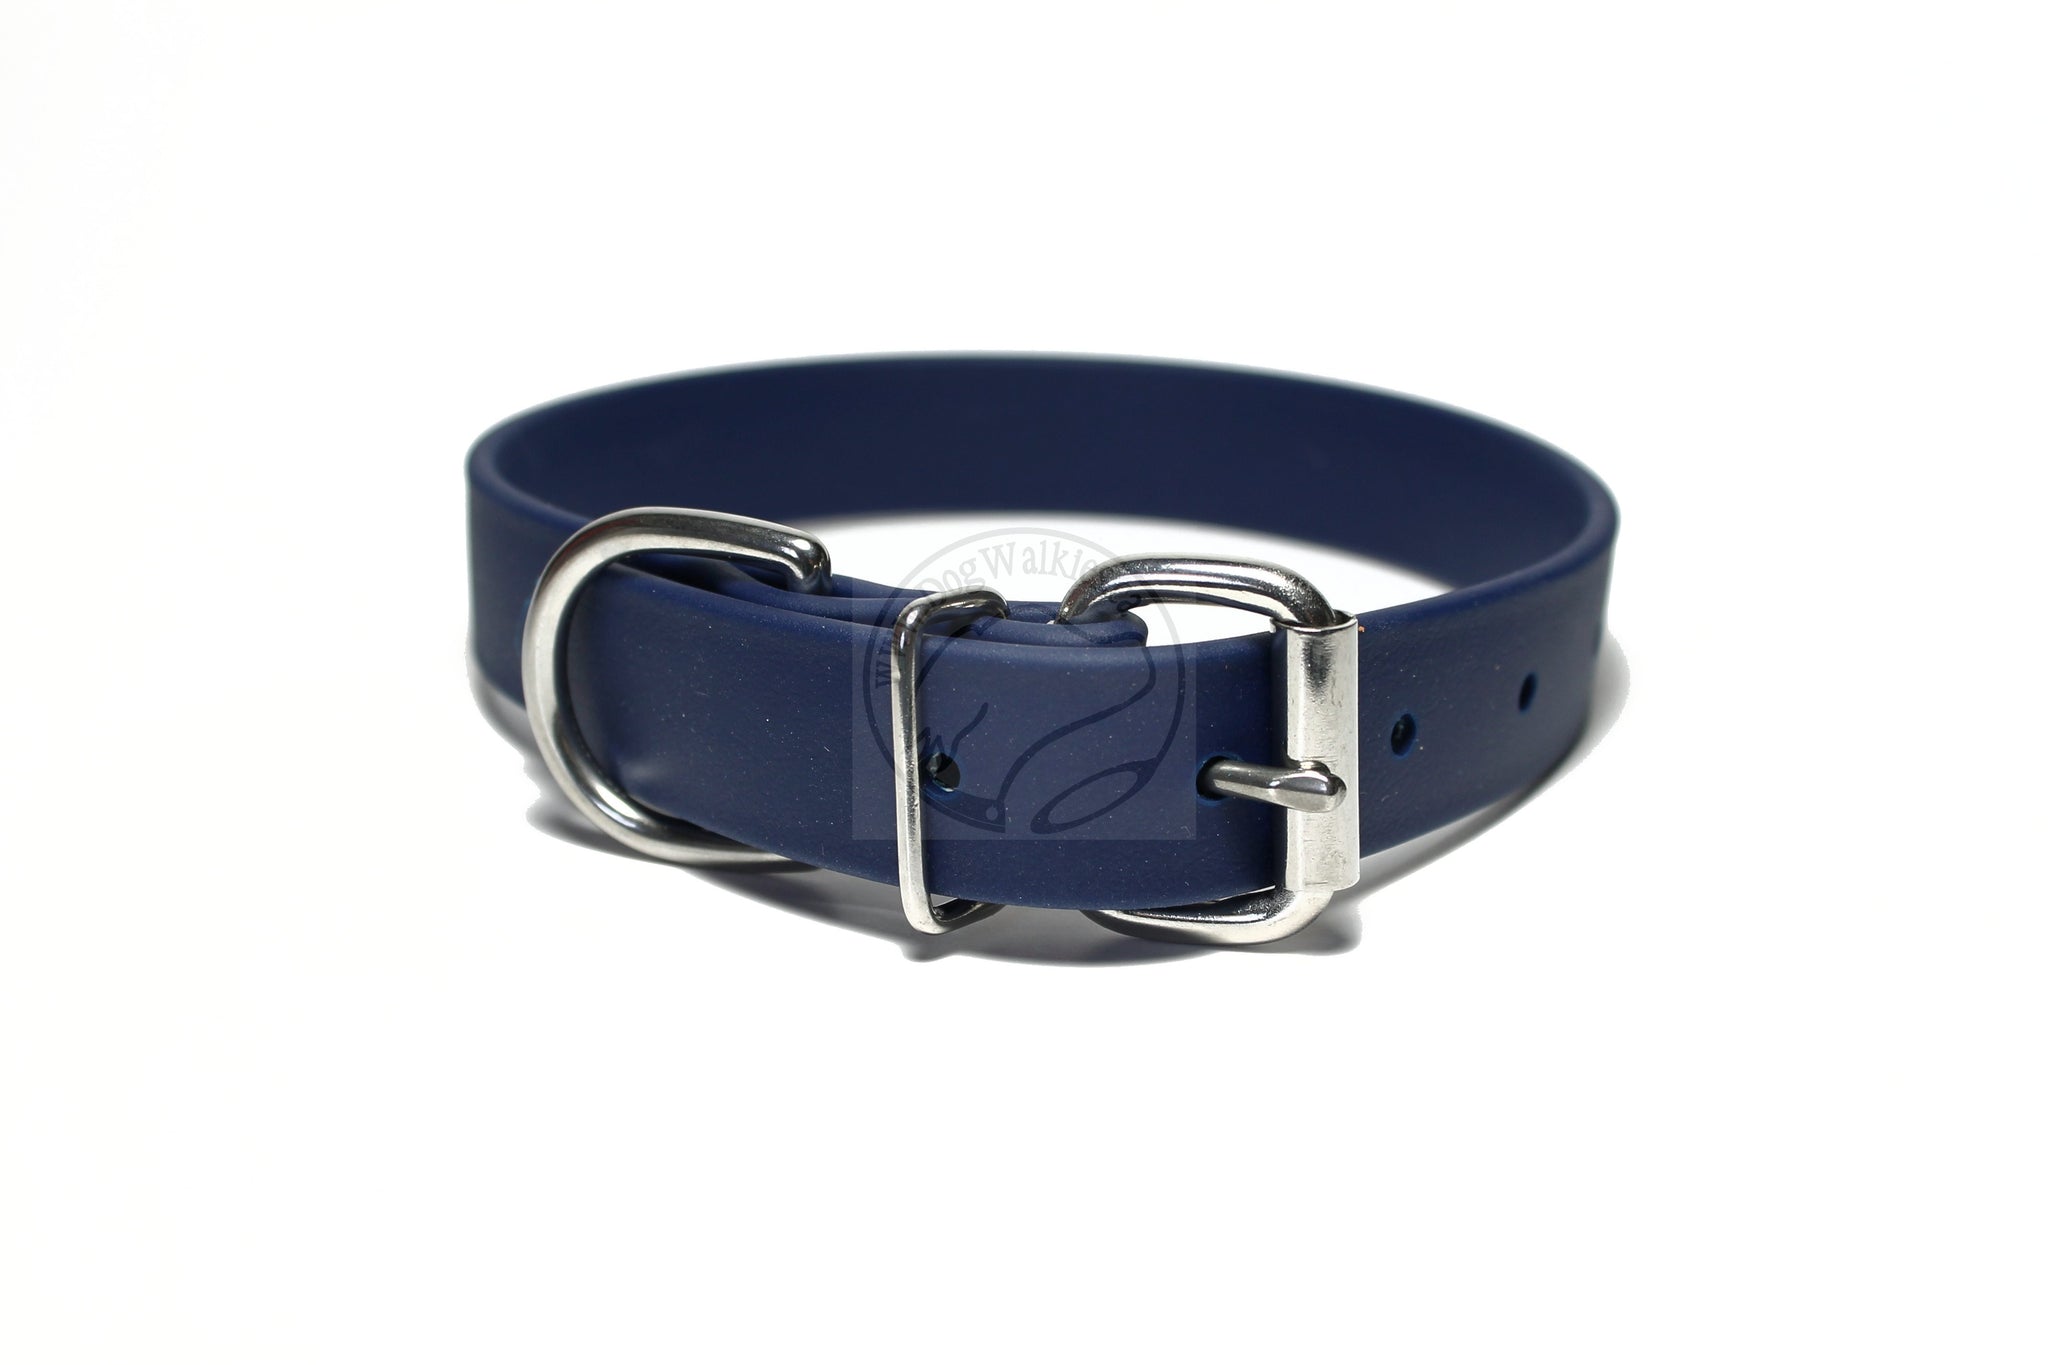 Navy Blue Biothane Dog Collar - 1 inch (25mm) wide